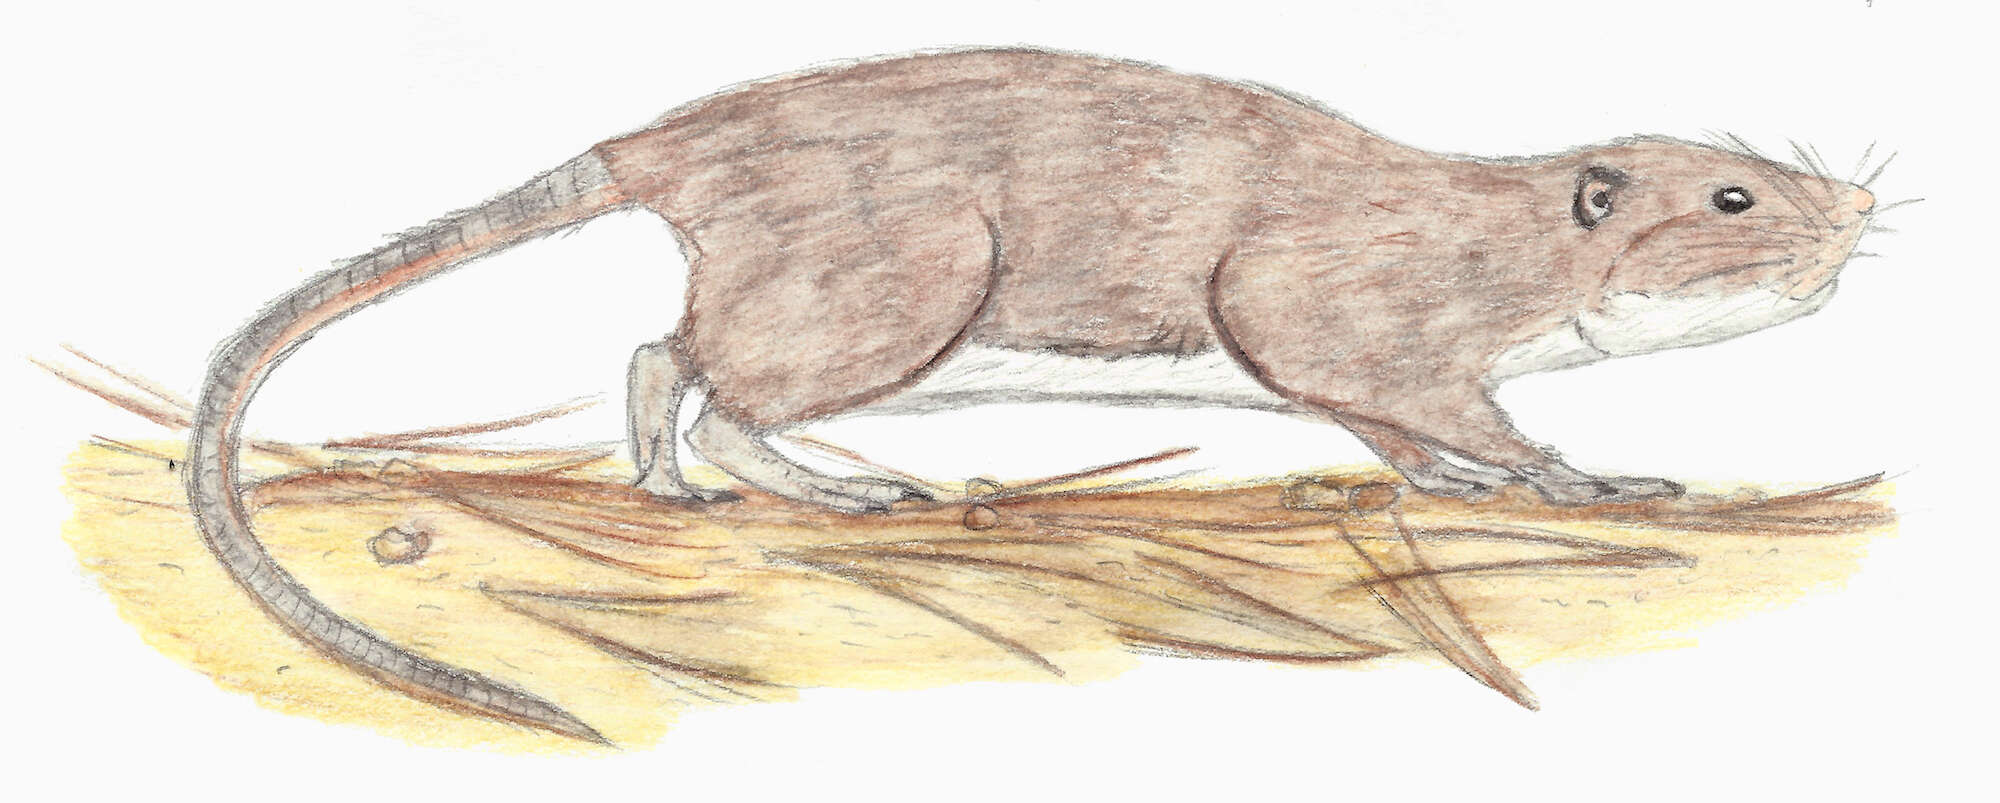 Image of Gran Canaria giant rat